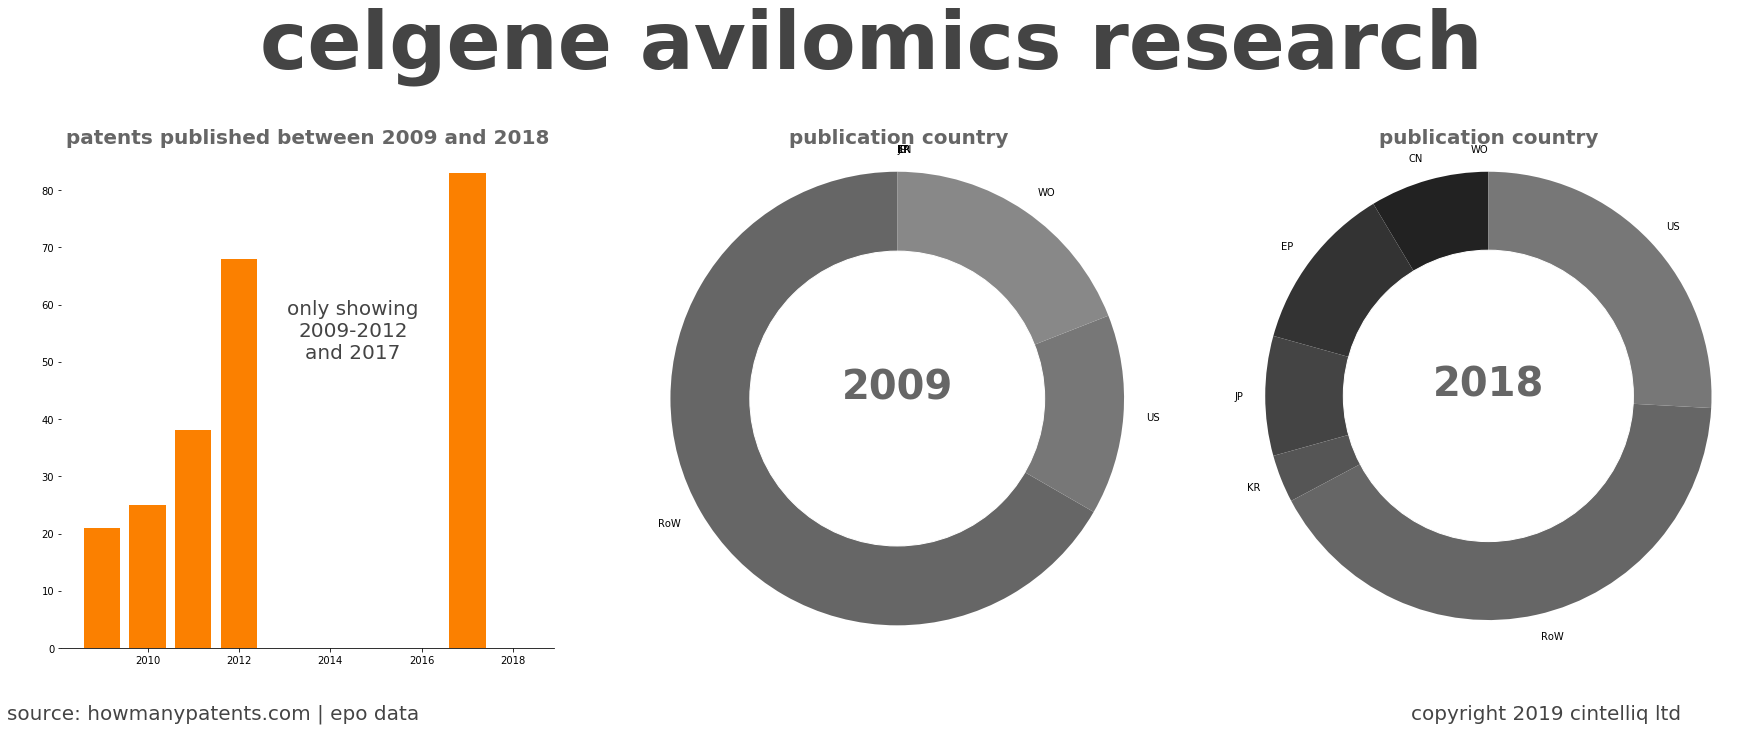 summary of patents for Celgene Avilomics Research